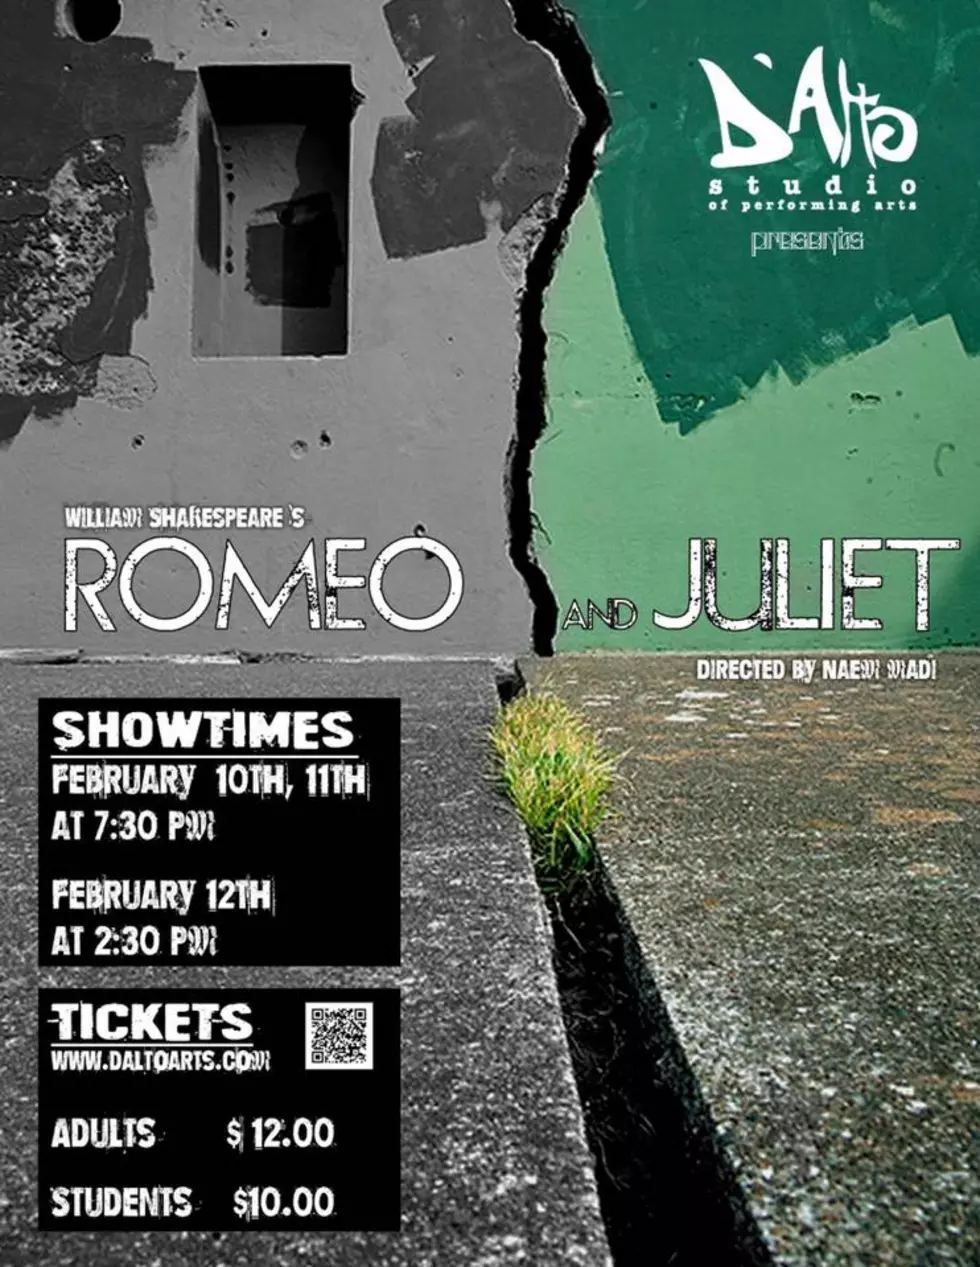 D’Alto Studio of Performing Arts Presents Romeo and Juliet! (Interview)